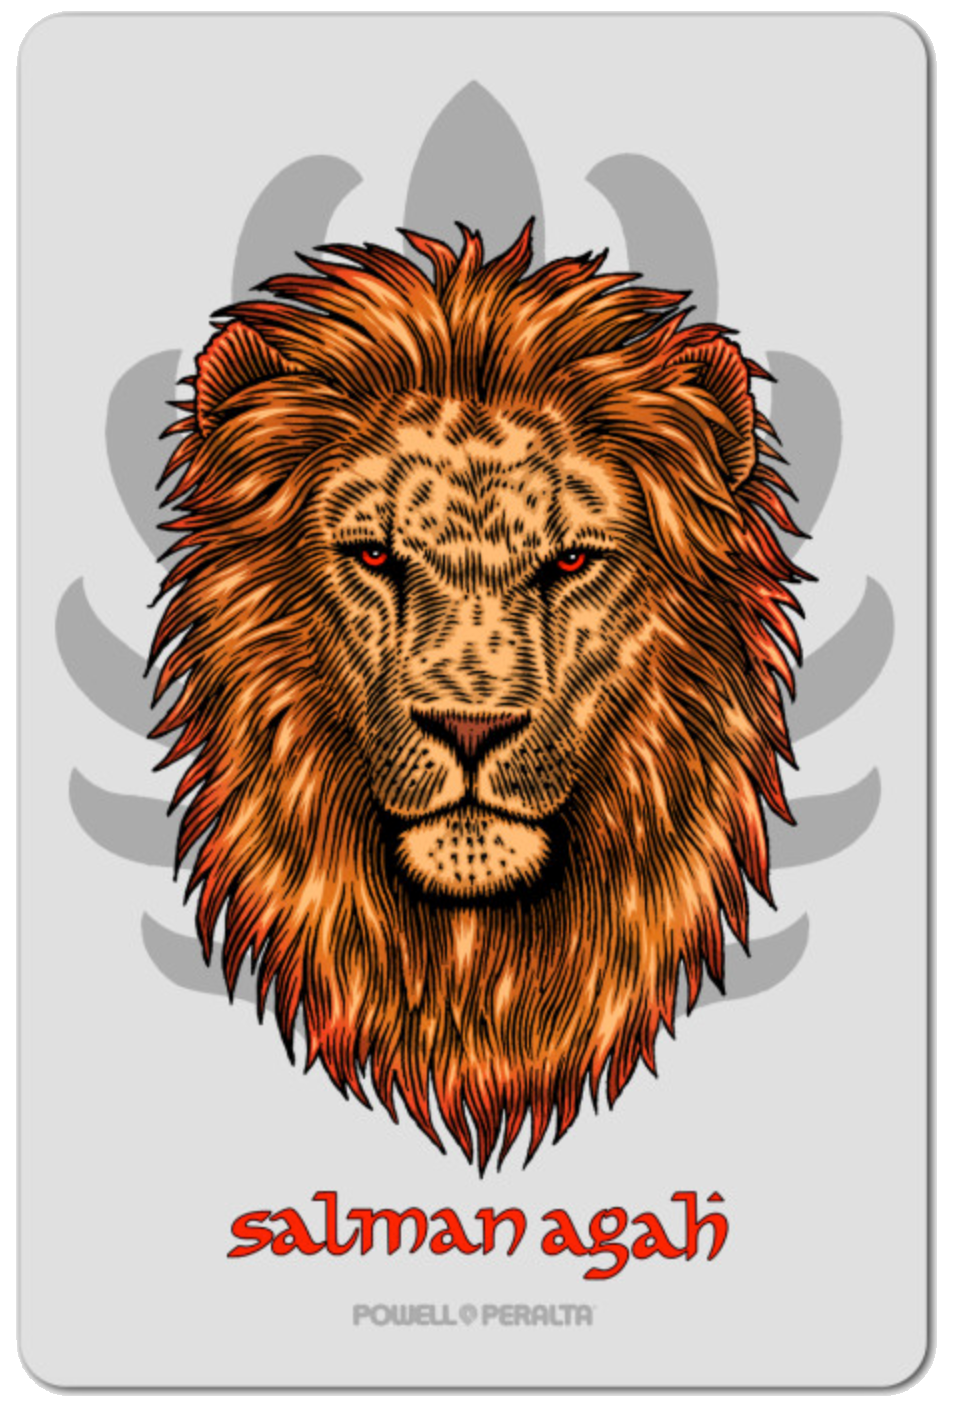 Powell Peralta Salman Agah Lion Sticker